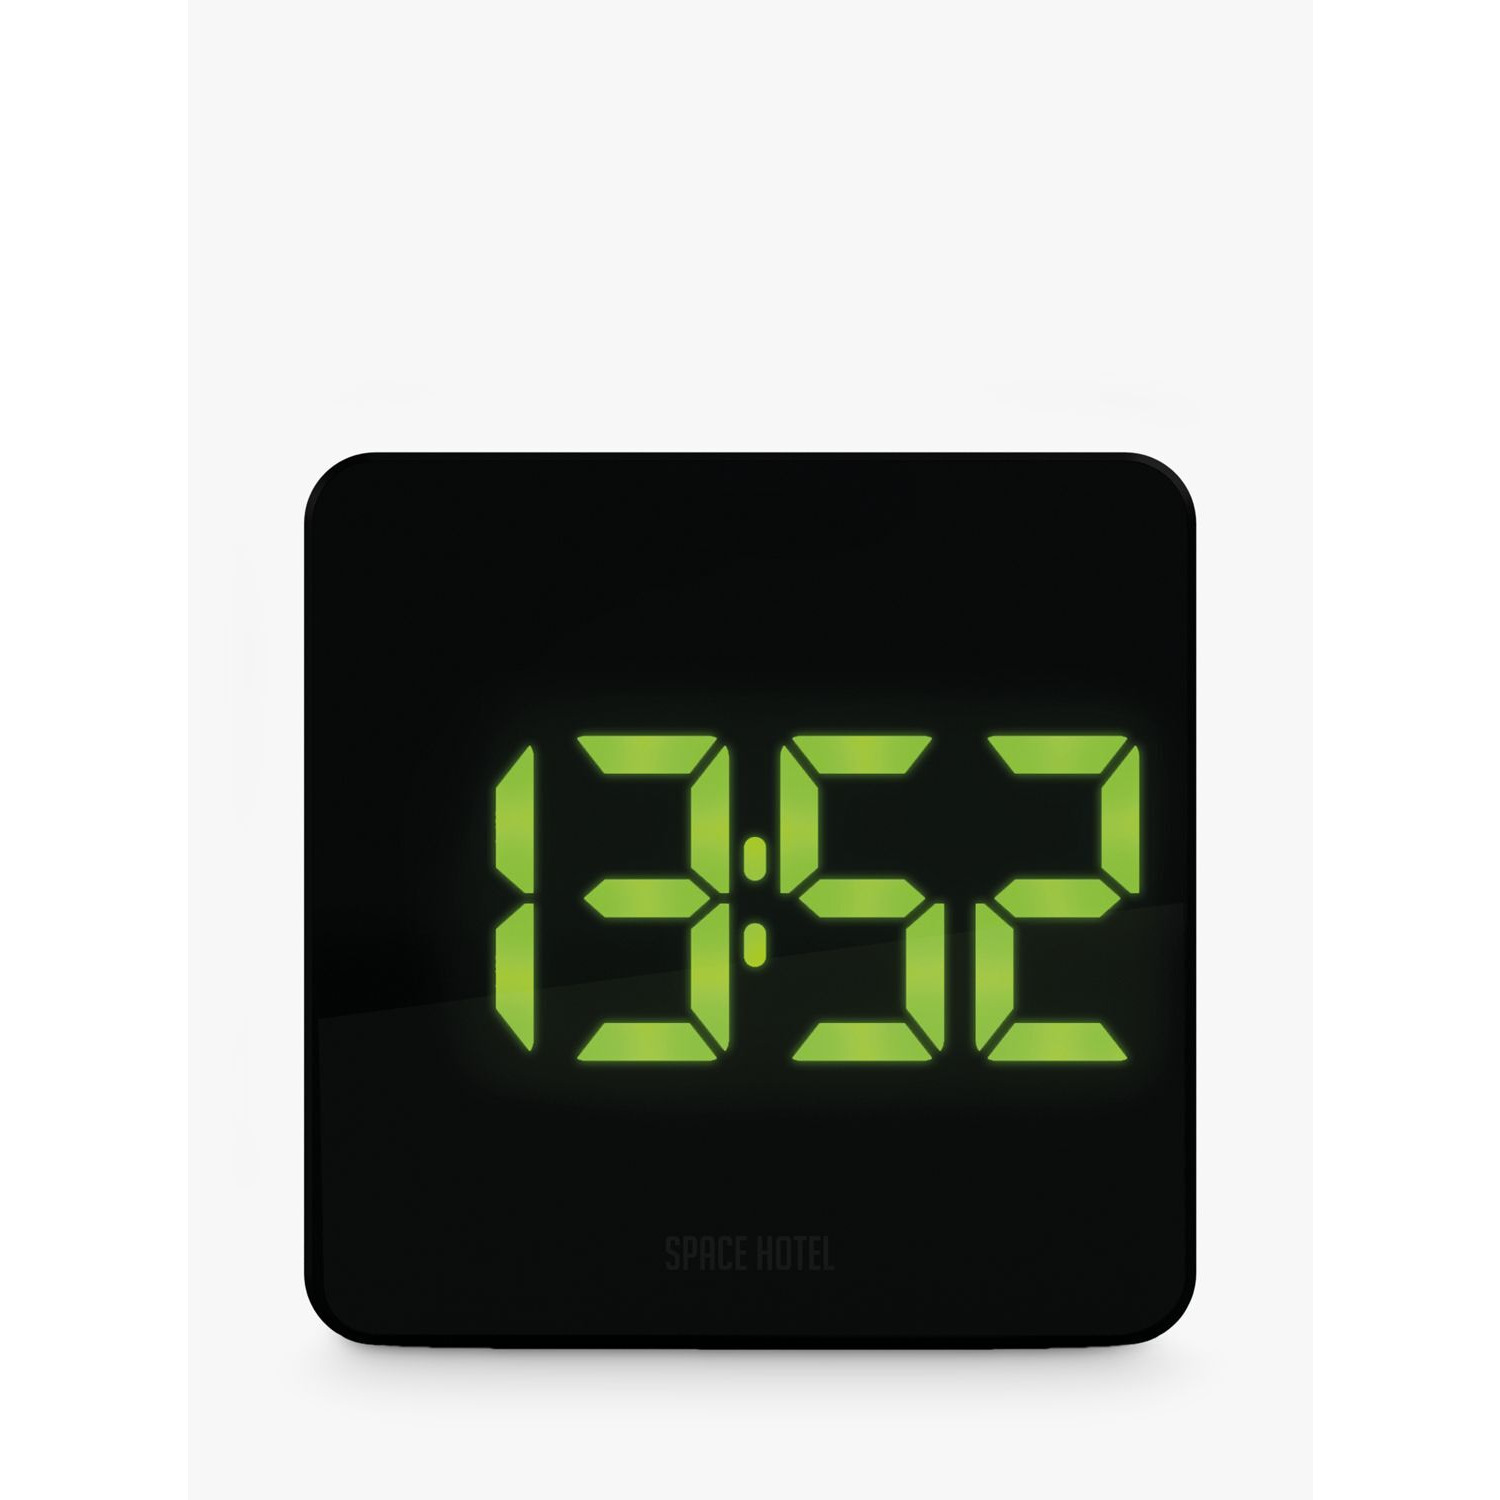 Space Hotel Orbatron LED Digital Alarm Clock - image 1